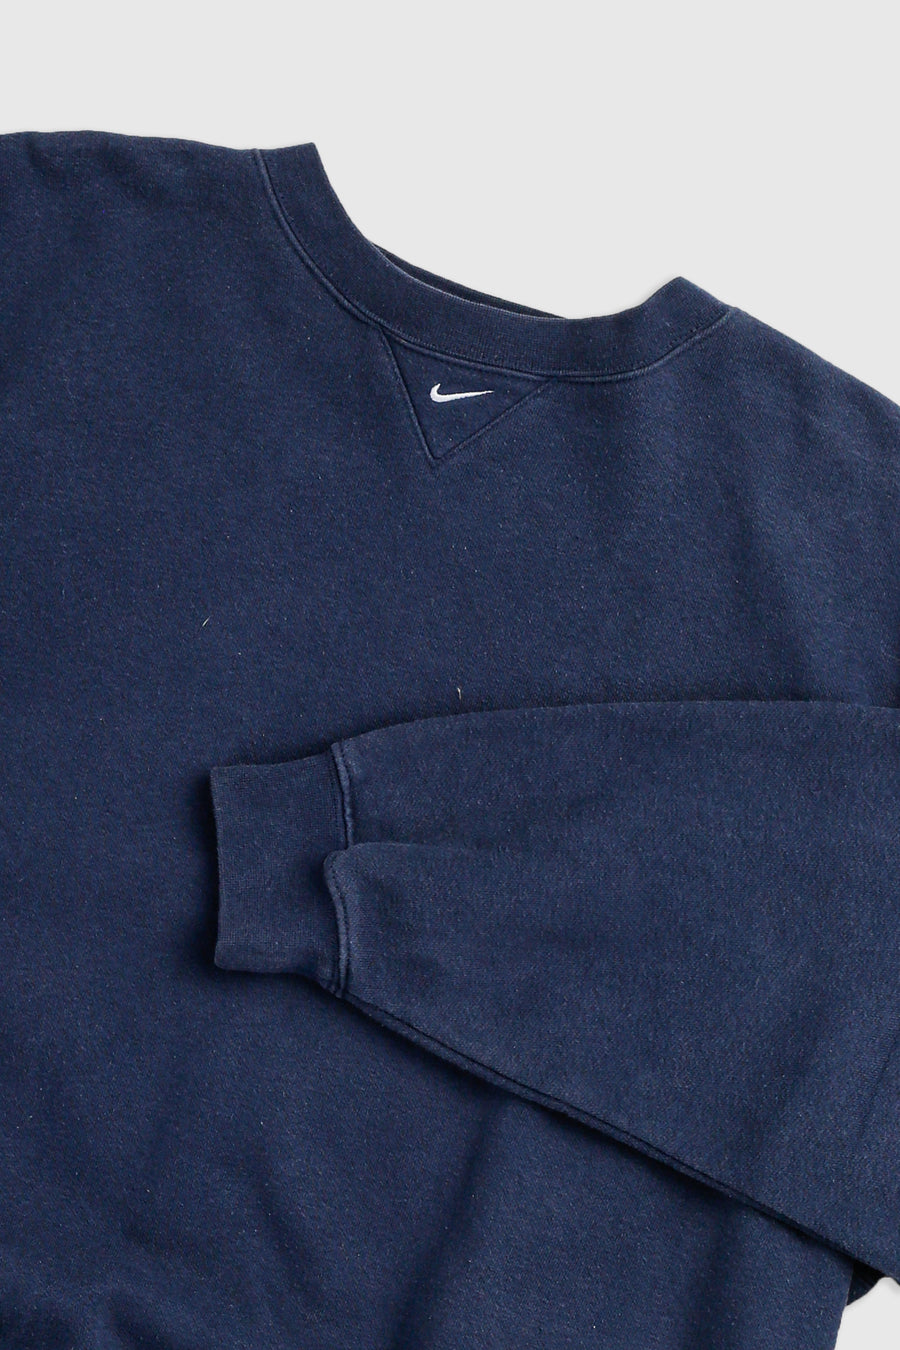 Vintage Nike Sweatshirt - M